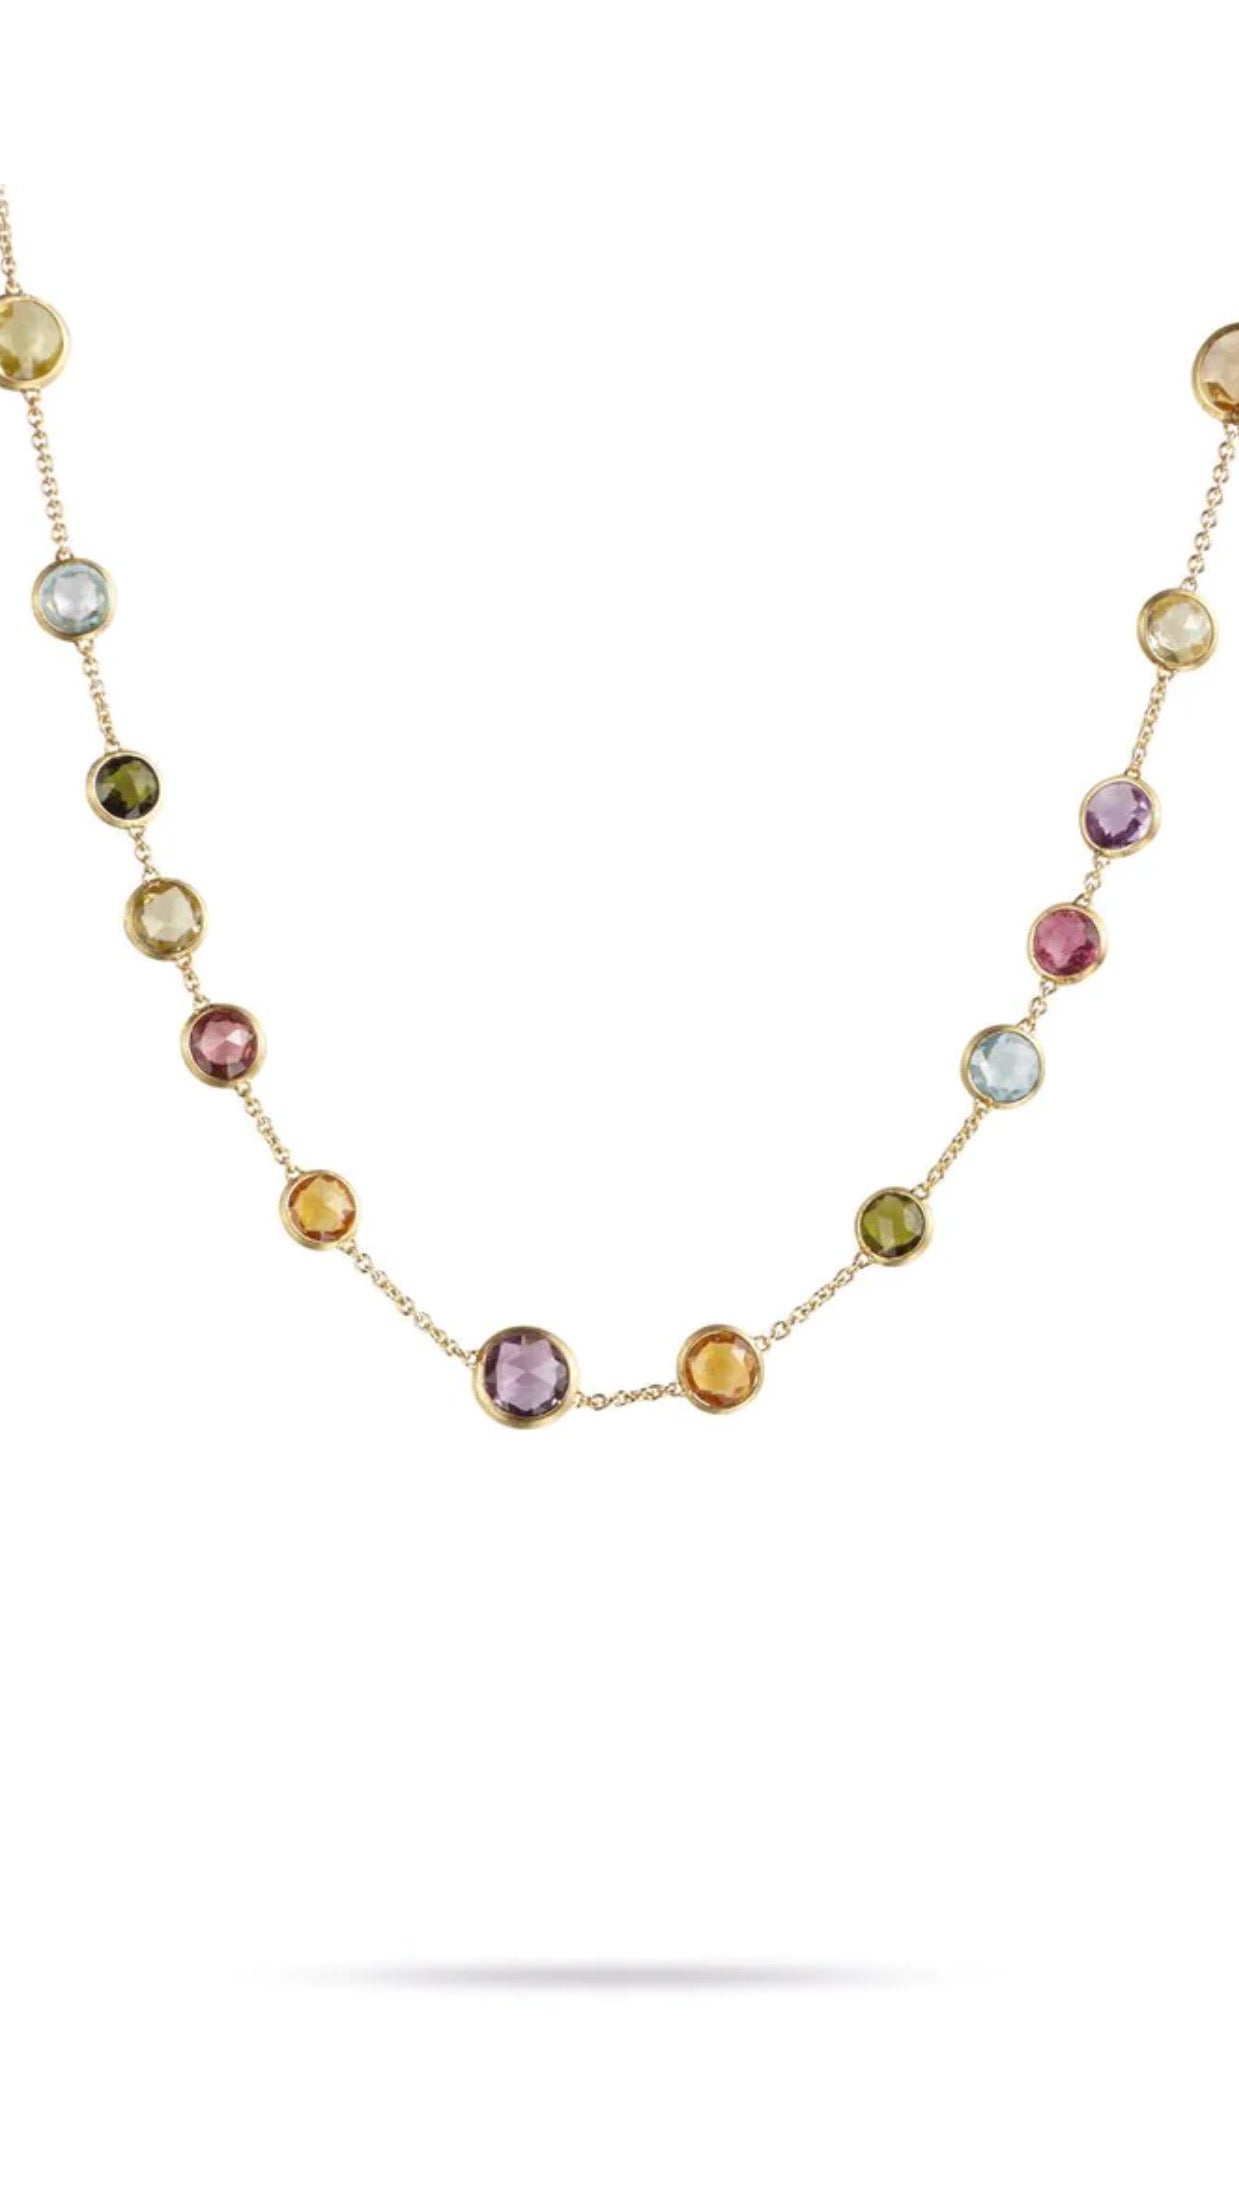 Natural Diamond Beads, Size: Mix at Rs 8223/carat in Jaipur